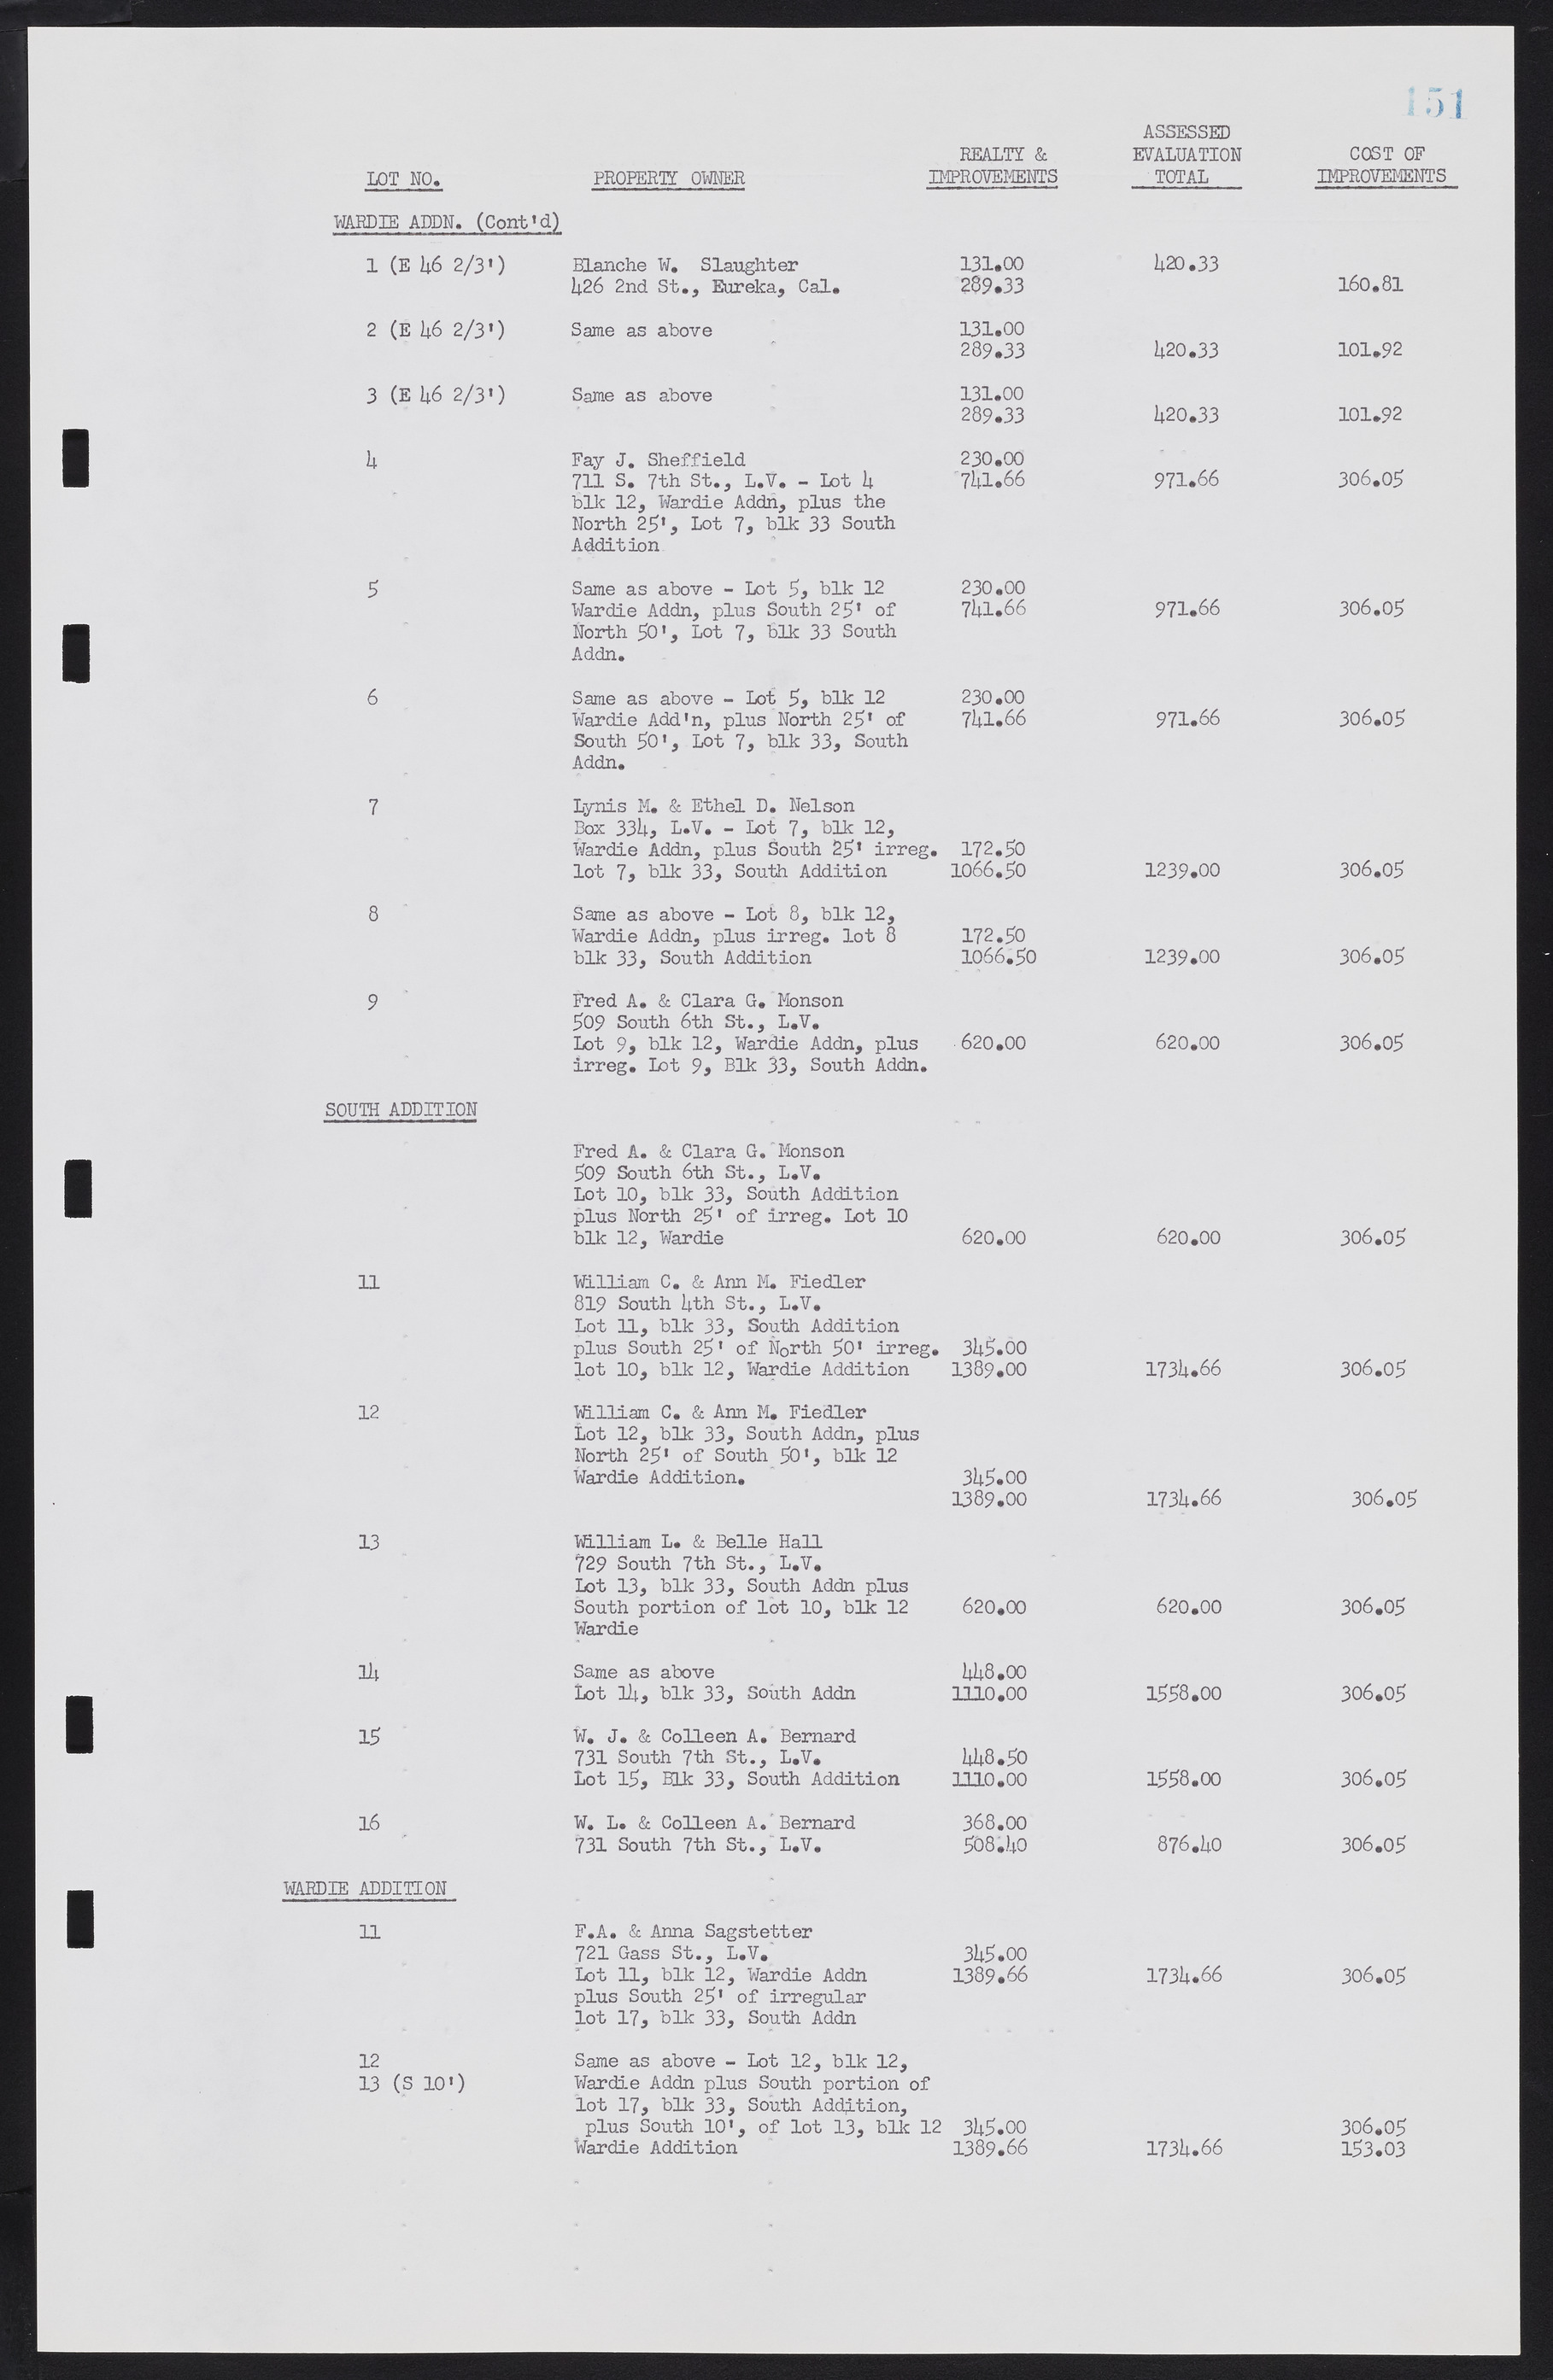 Las Vegas City Commission Minutes, February 17, 1954 to September 21, 1955, lvc000009-155